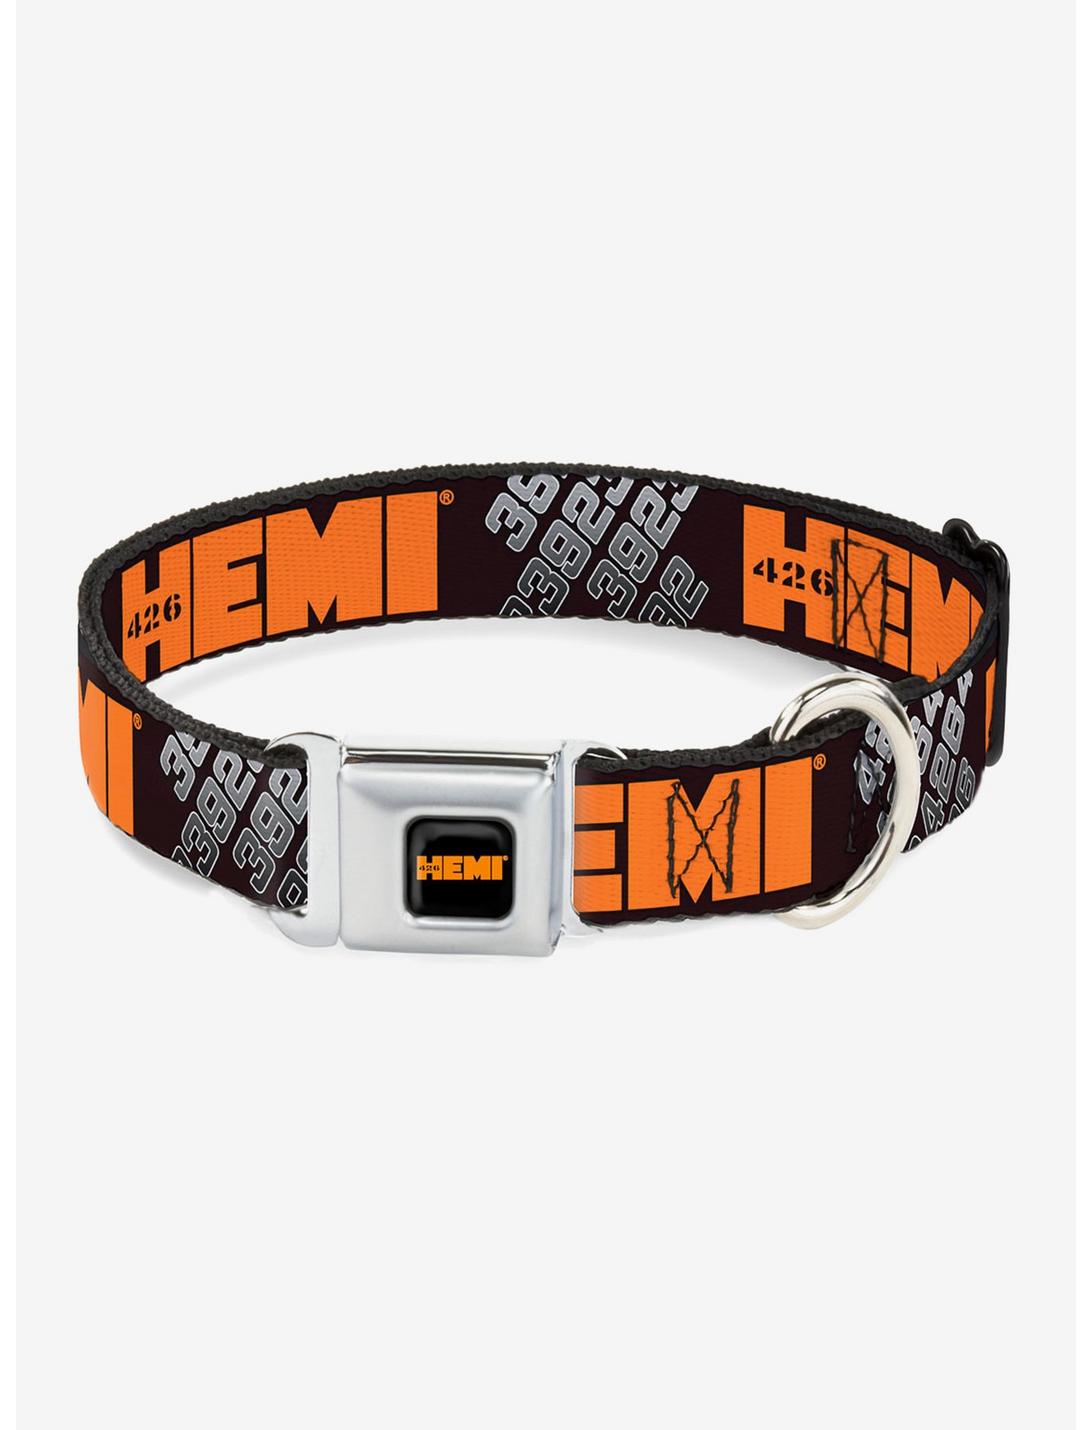 Hemi 426 Logo 392 426 Seatbelt Buckle Dog Collar, BLACK, hi-res